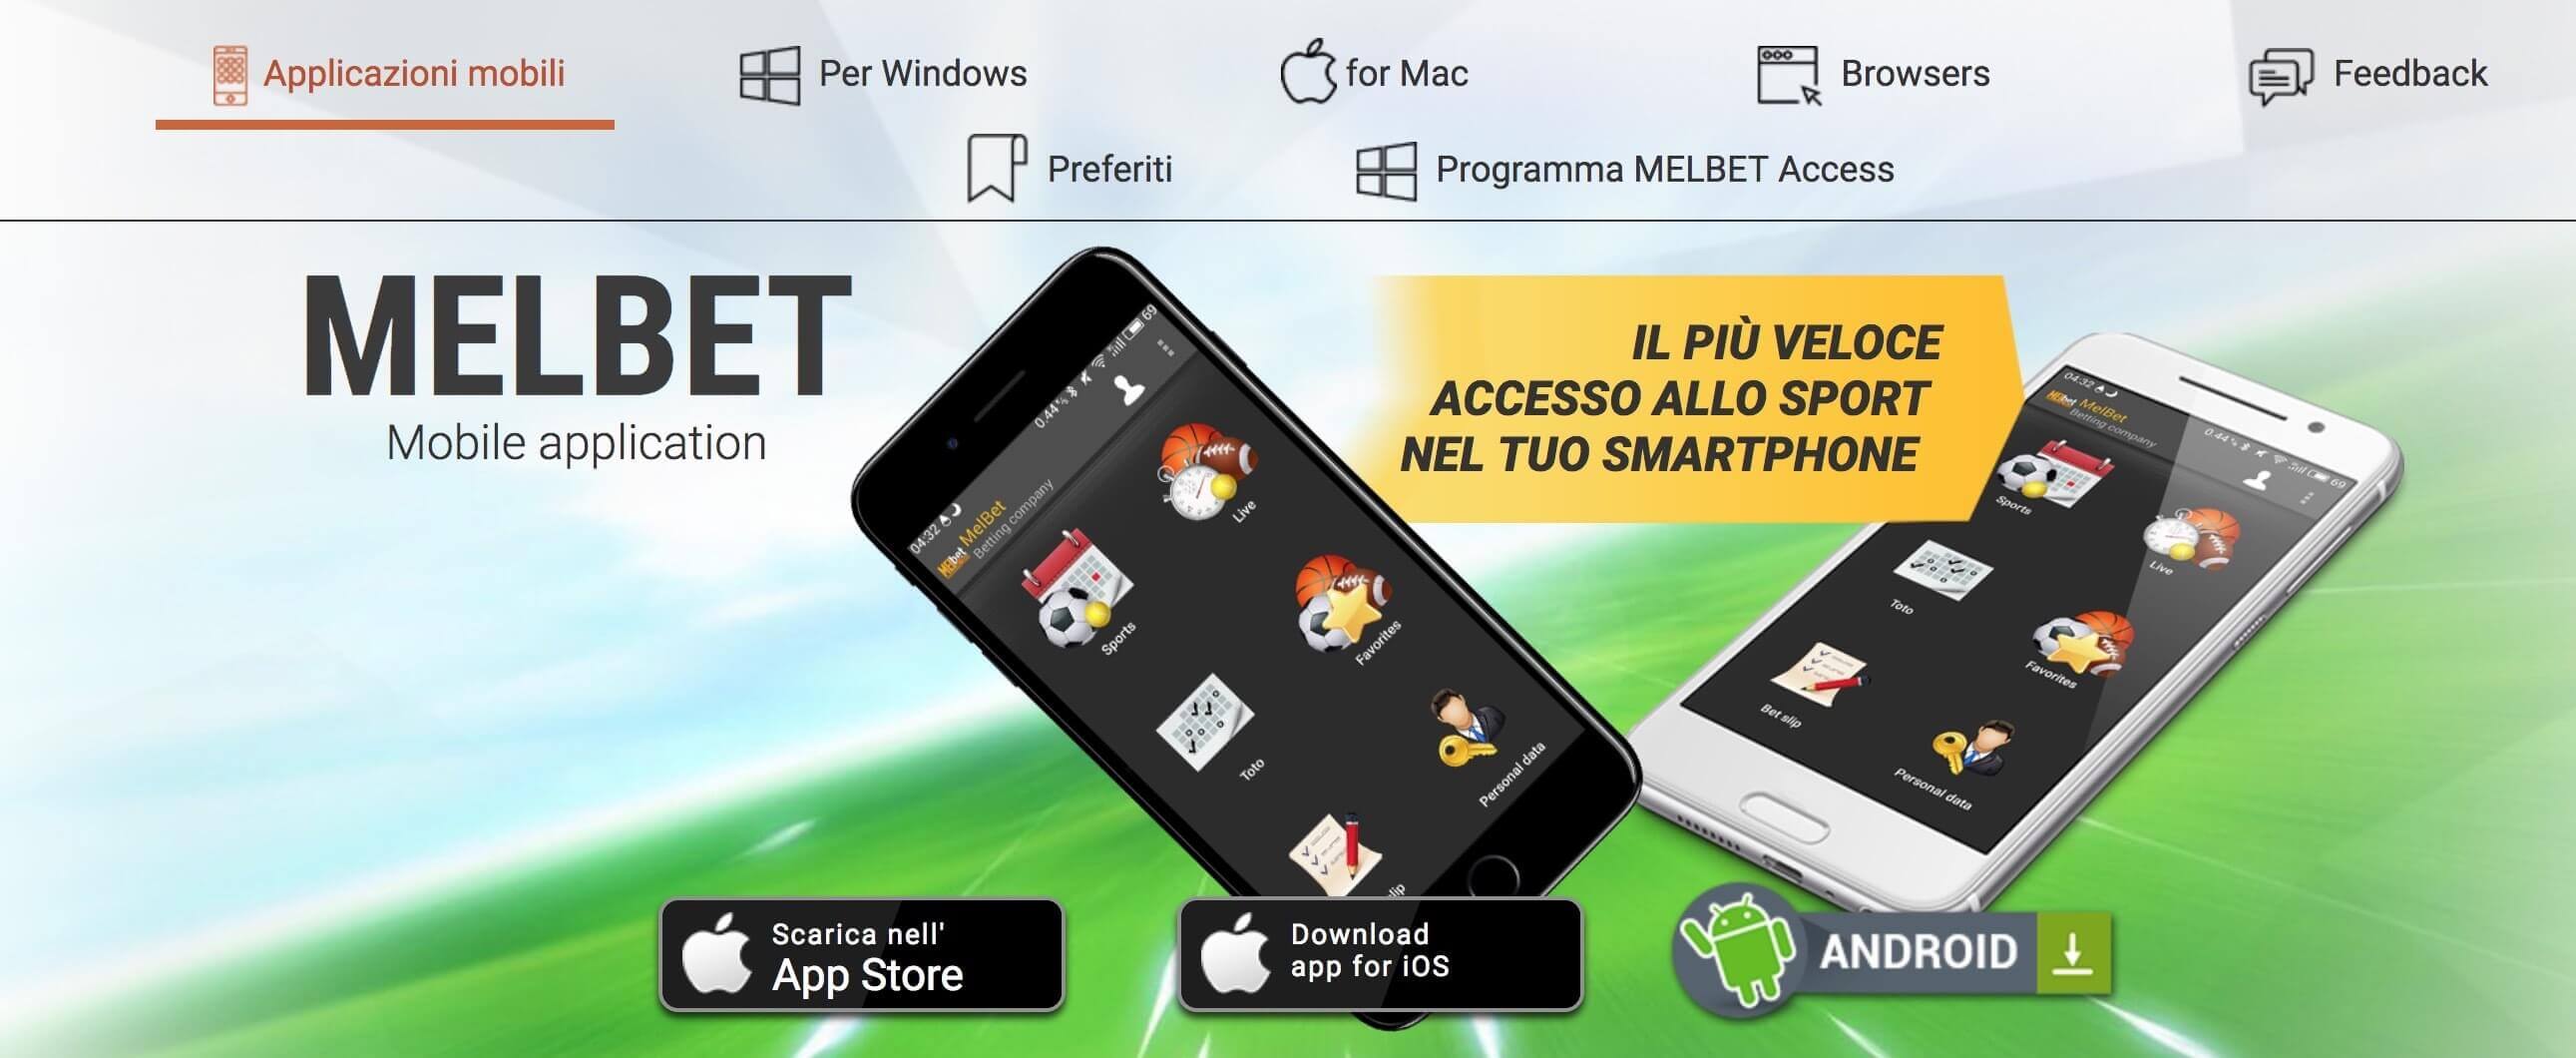 Melbet Download App Mobile